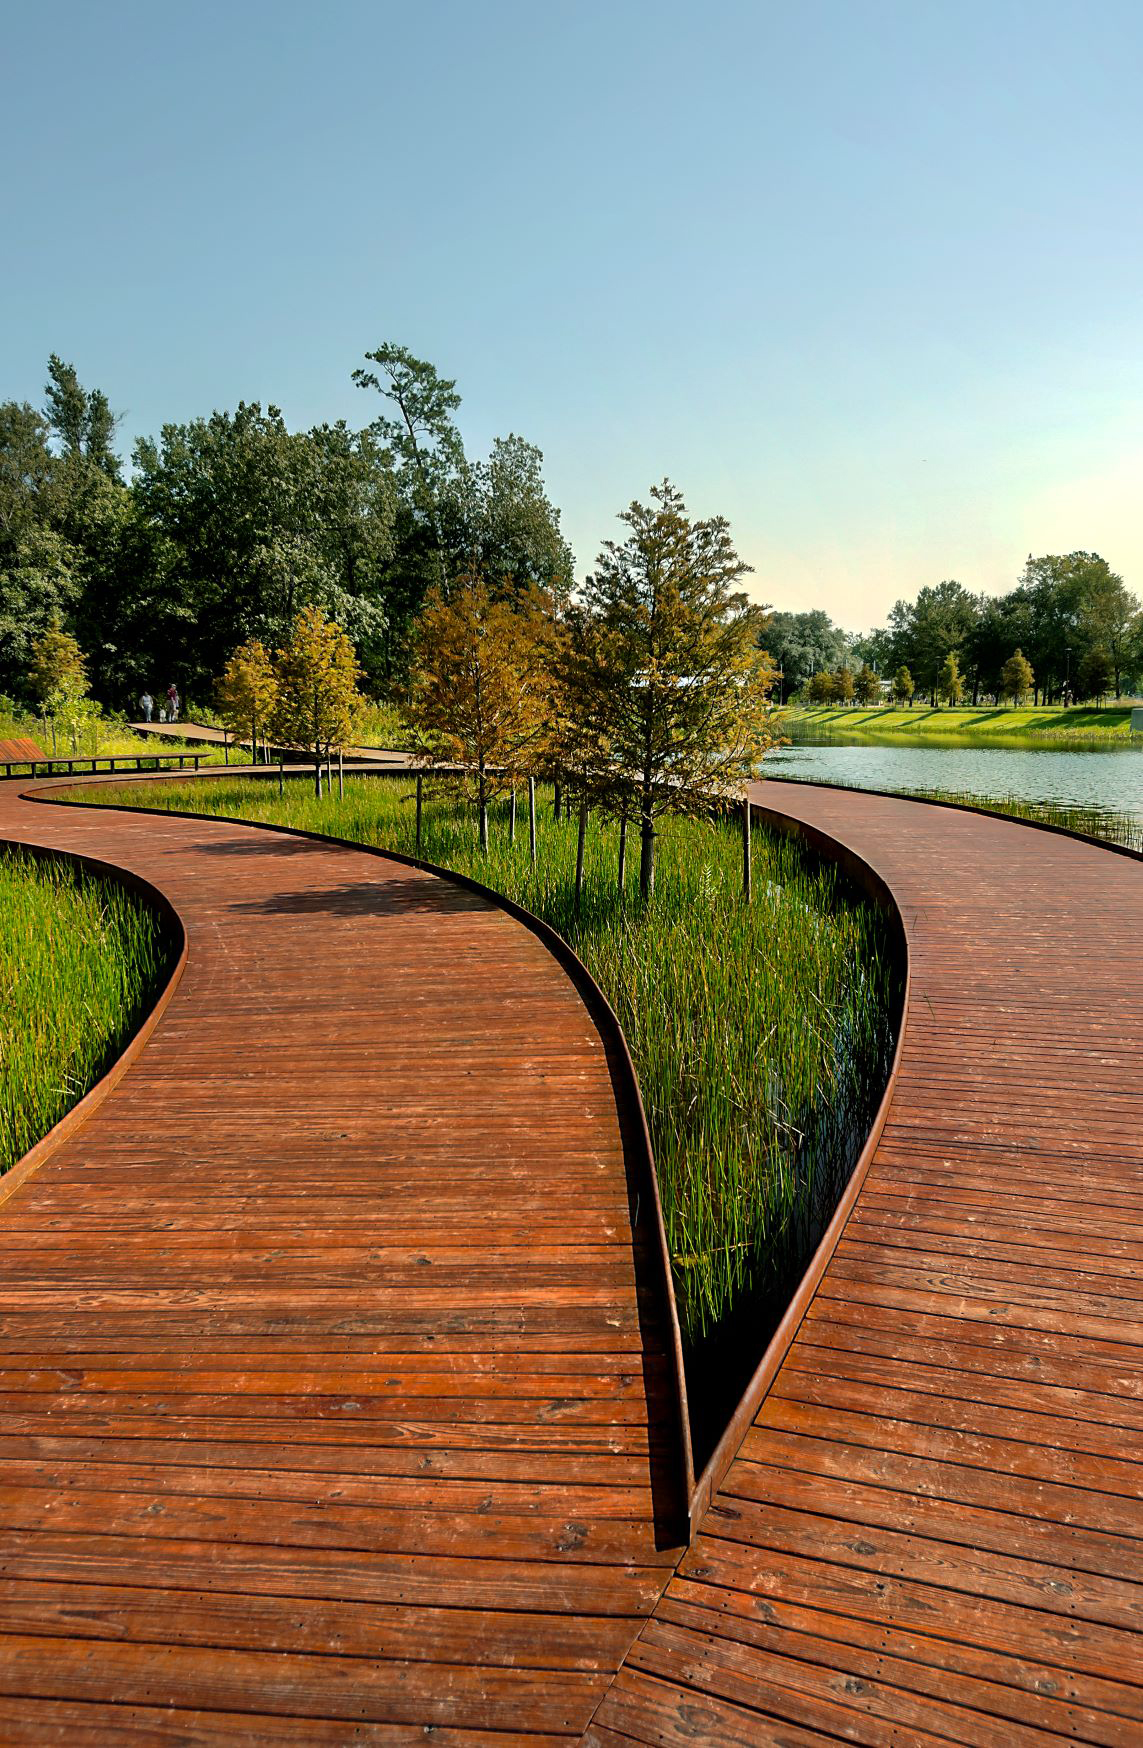  bifurcating wooden walkway in a park setting